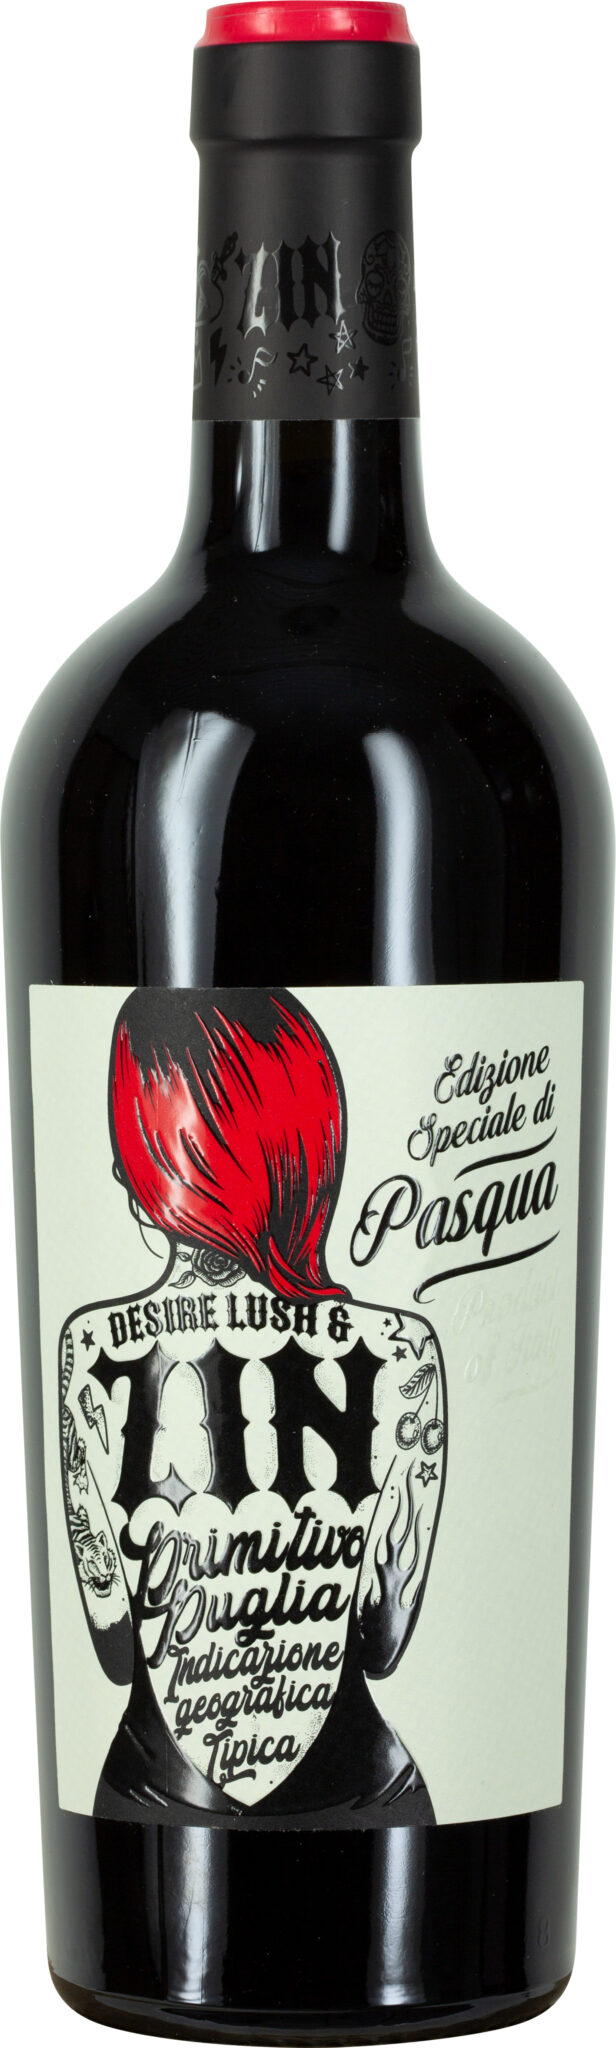 Pasqua Desire Lush & Zin, Primitivo Puglia IGT